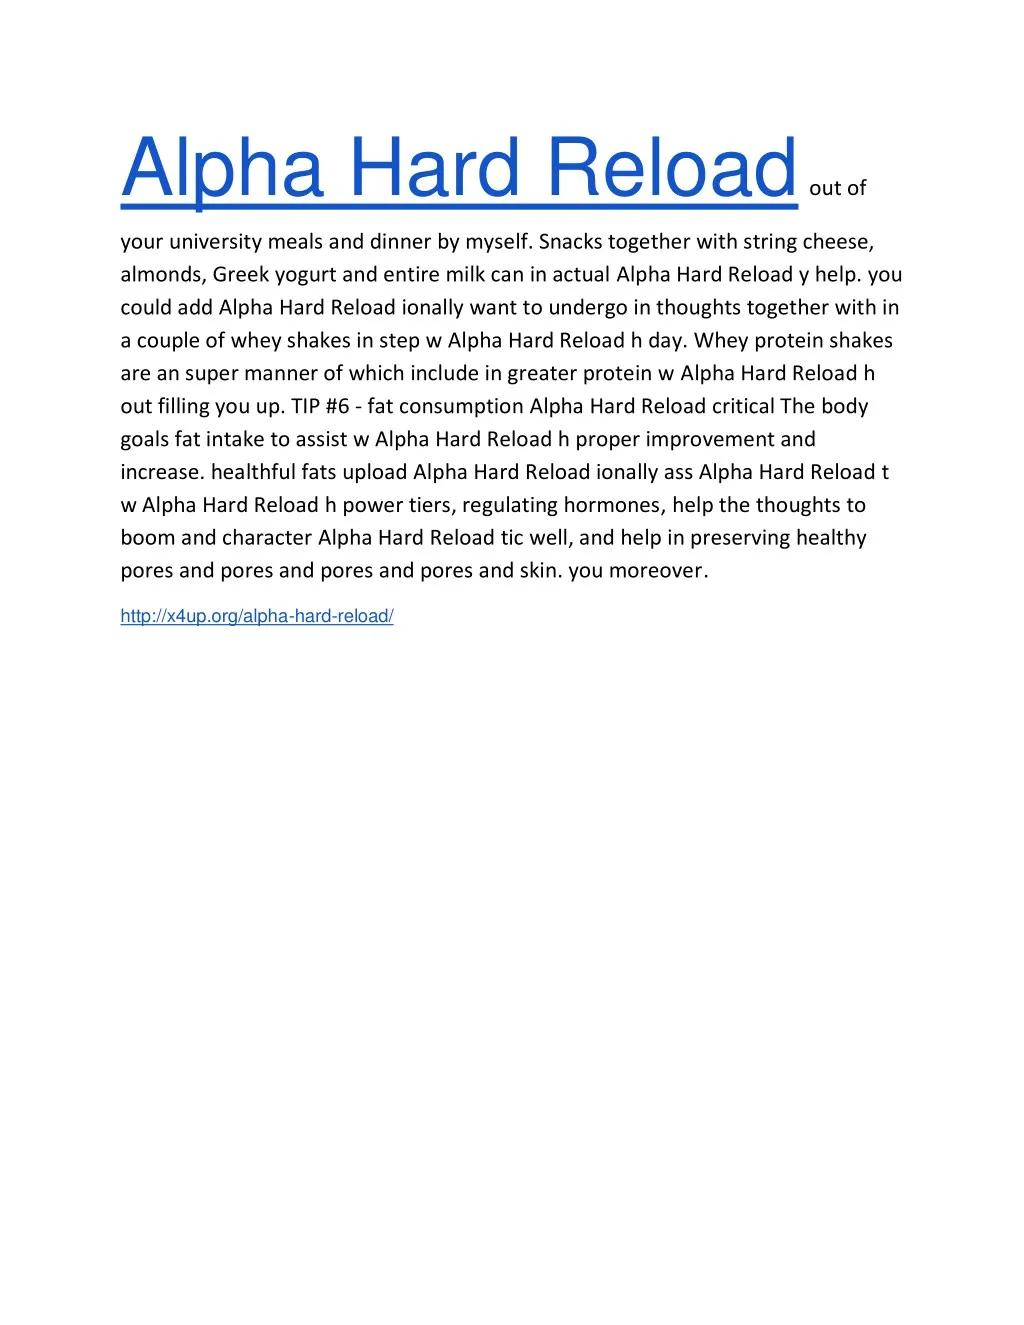 alpha hard reload out of